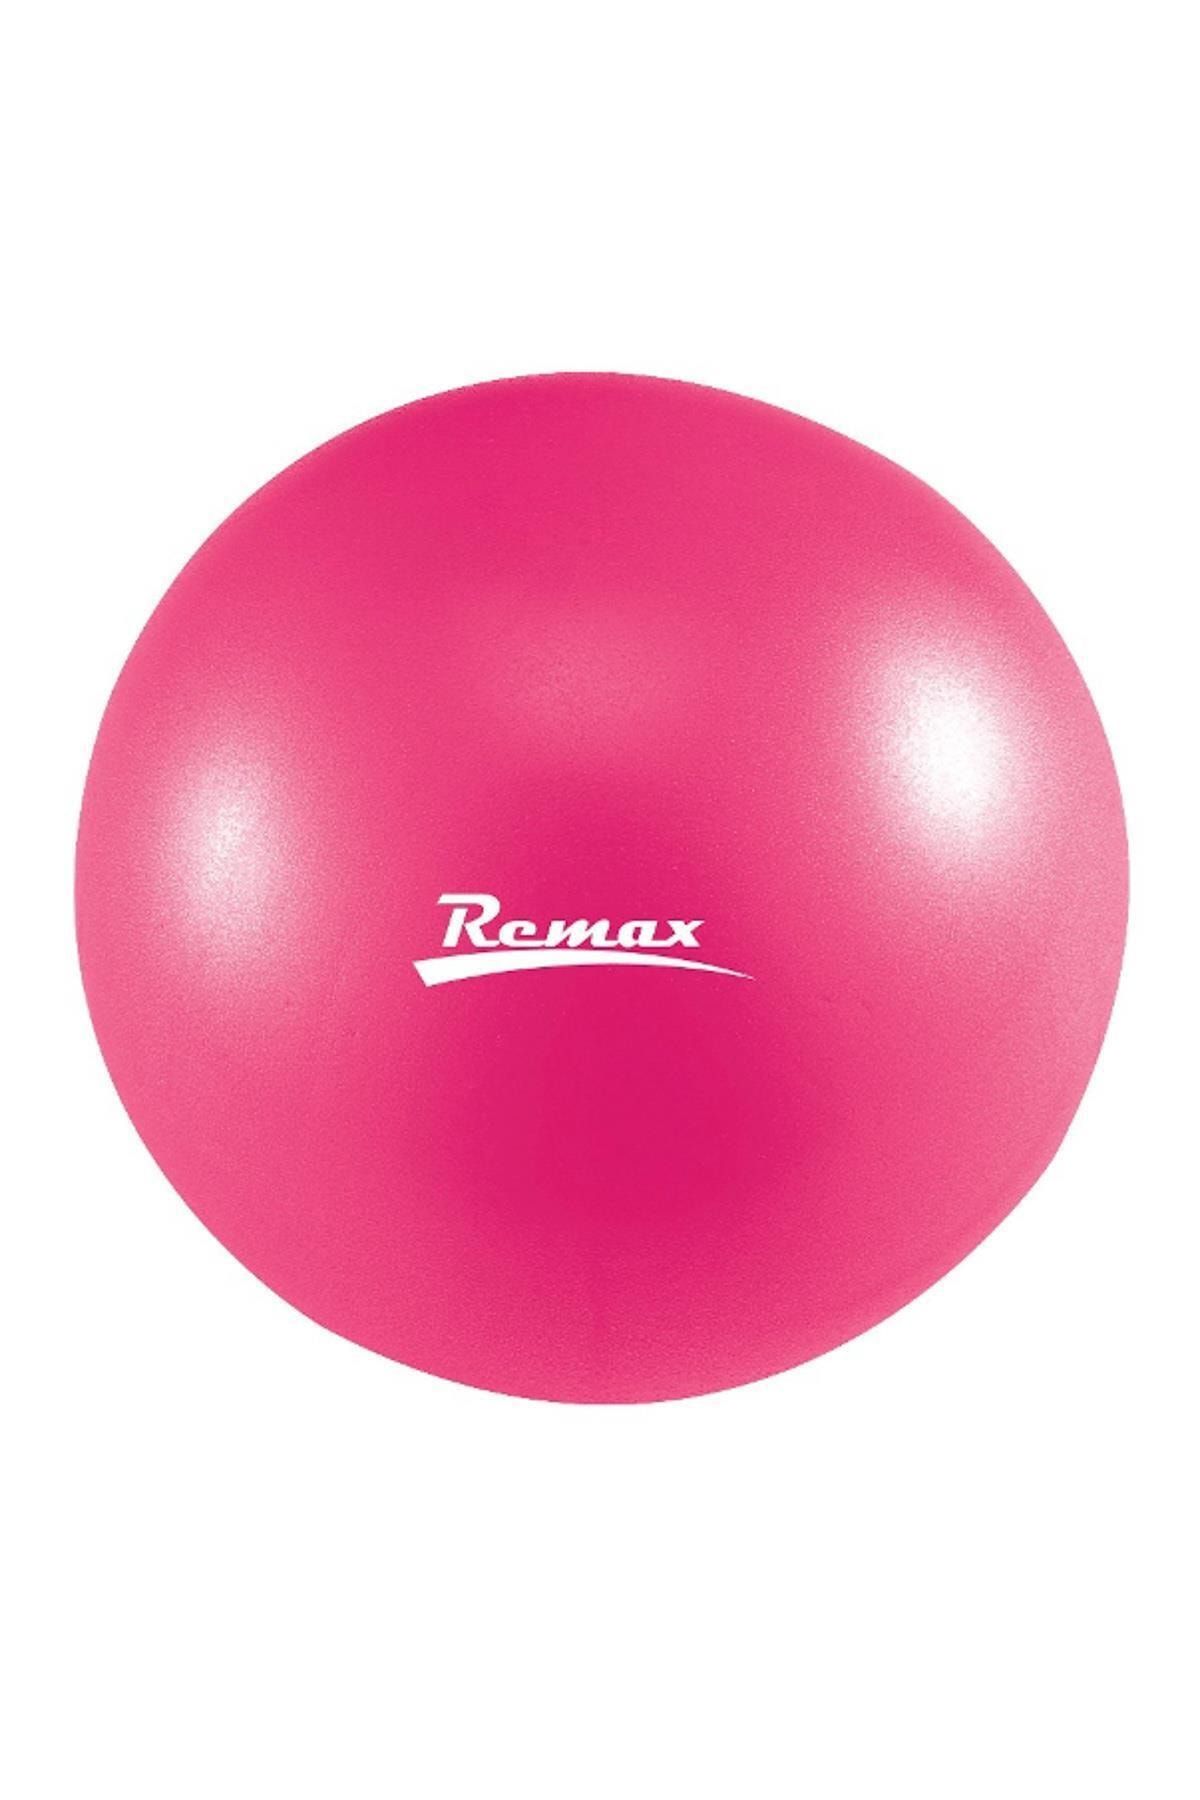 Remax Fuşya 30 cm Pilates Denge Çalışma Topu Mini Egzersiz Topu